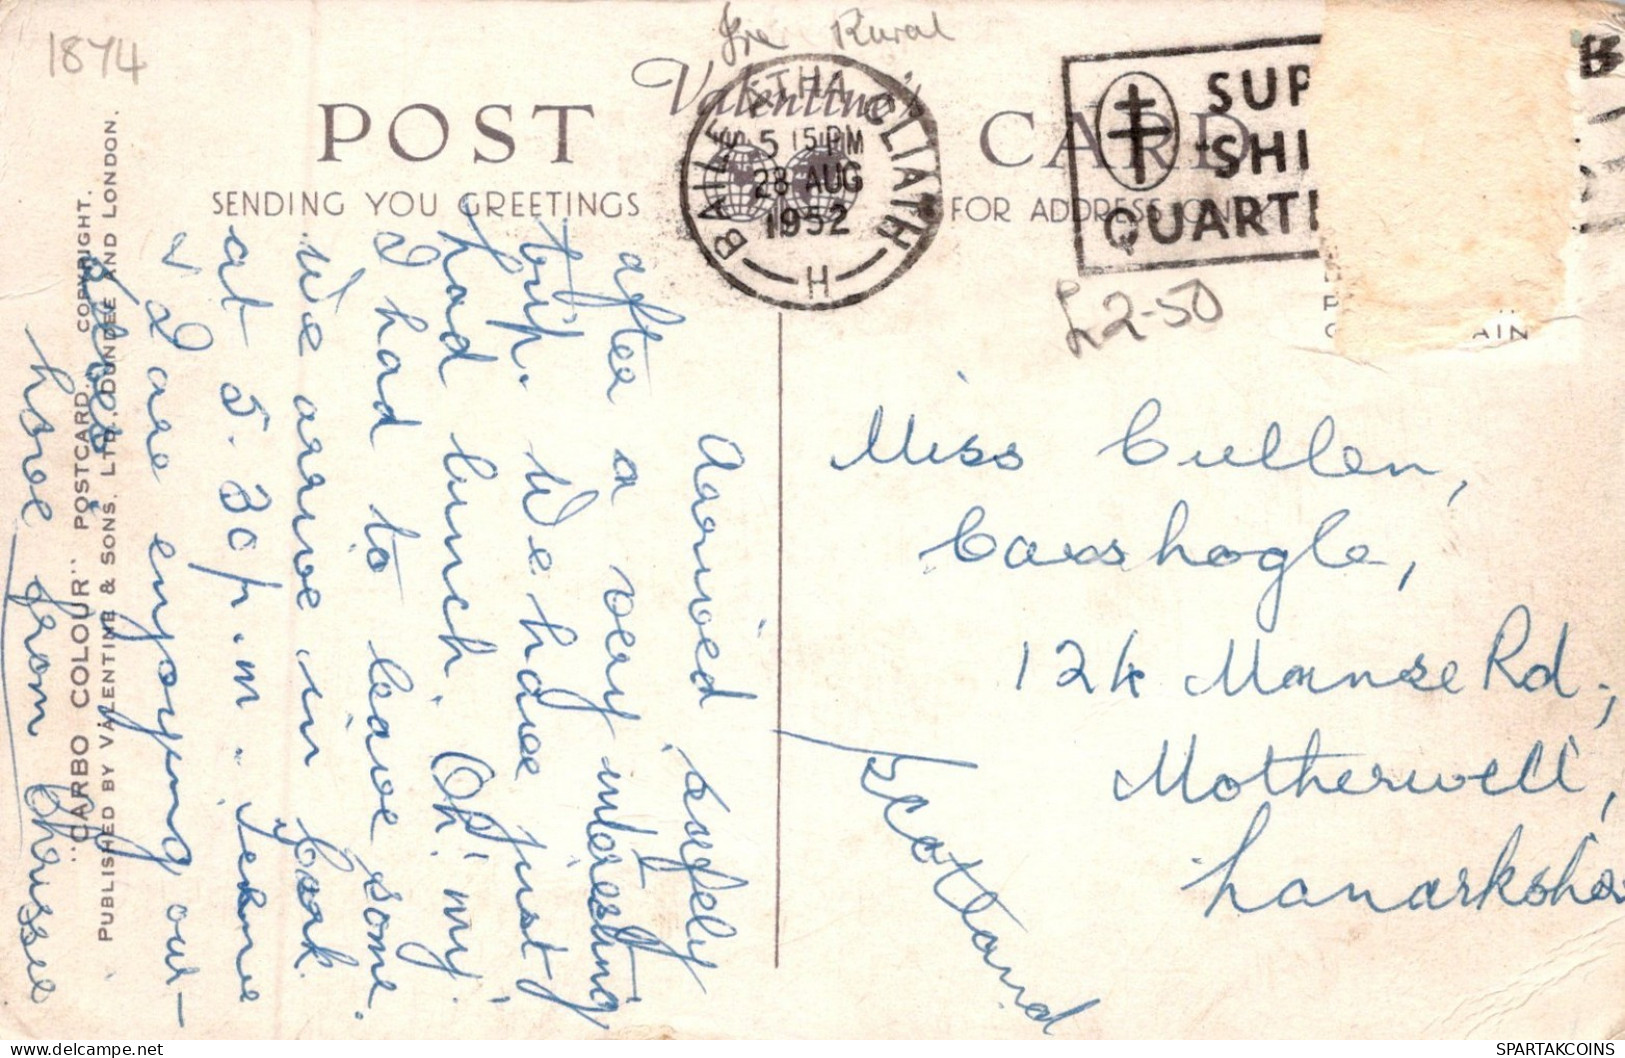 ÂNE Animaux Vintage Antique CPA Carte Postale #PAA236.A - Ezels